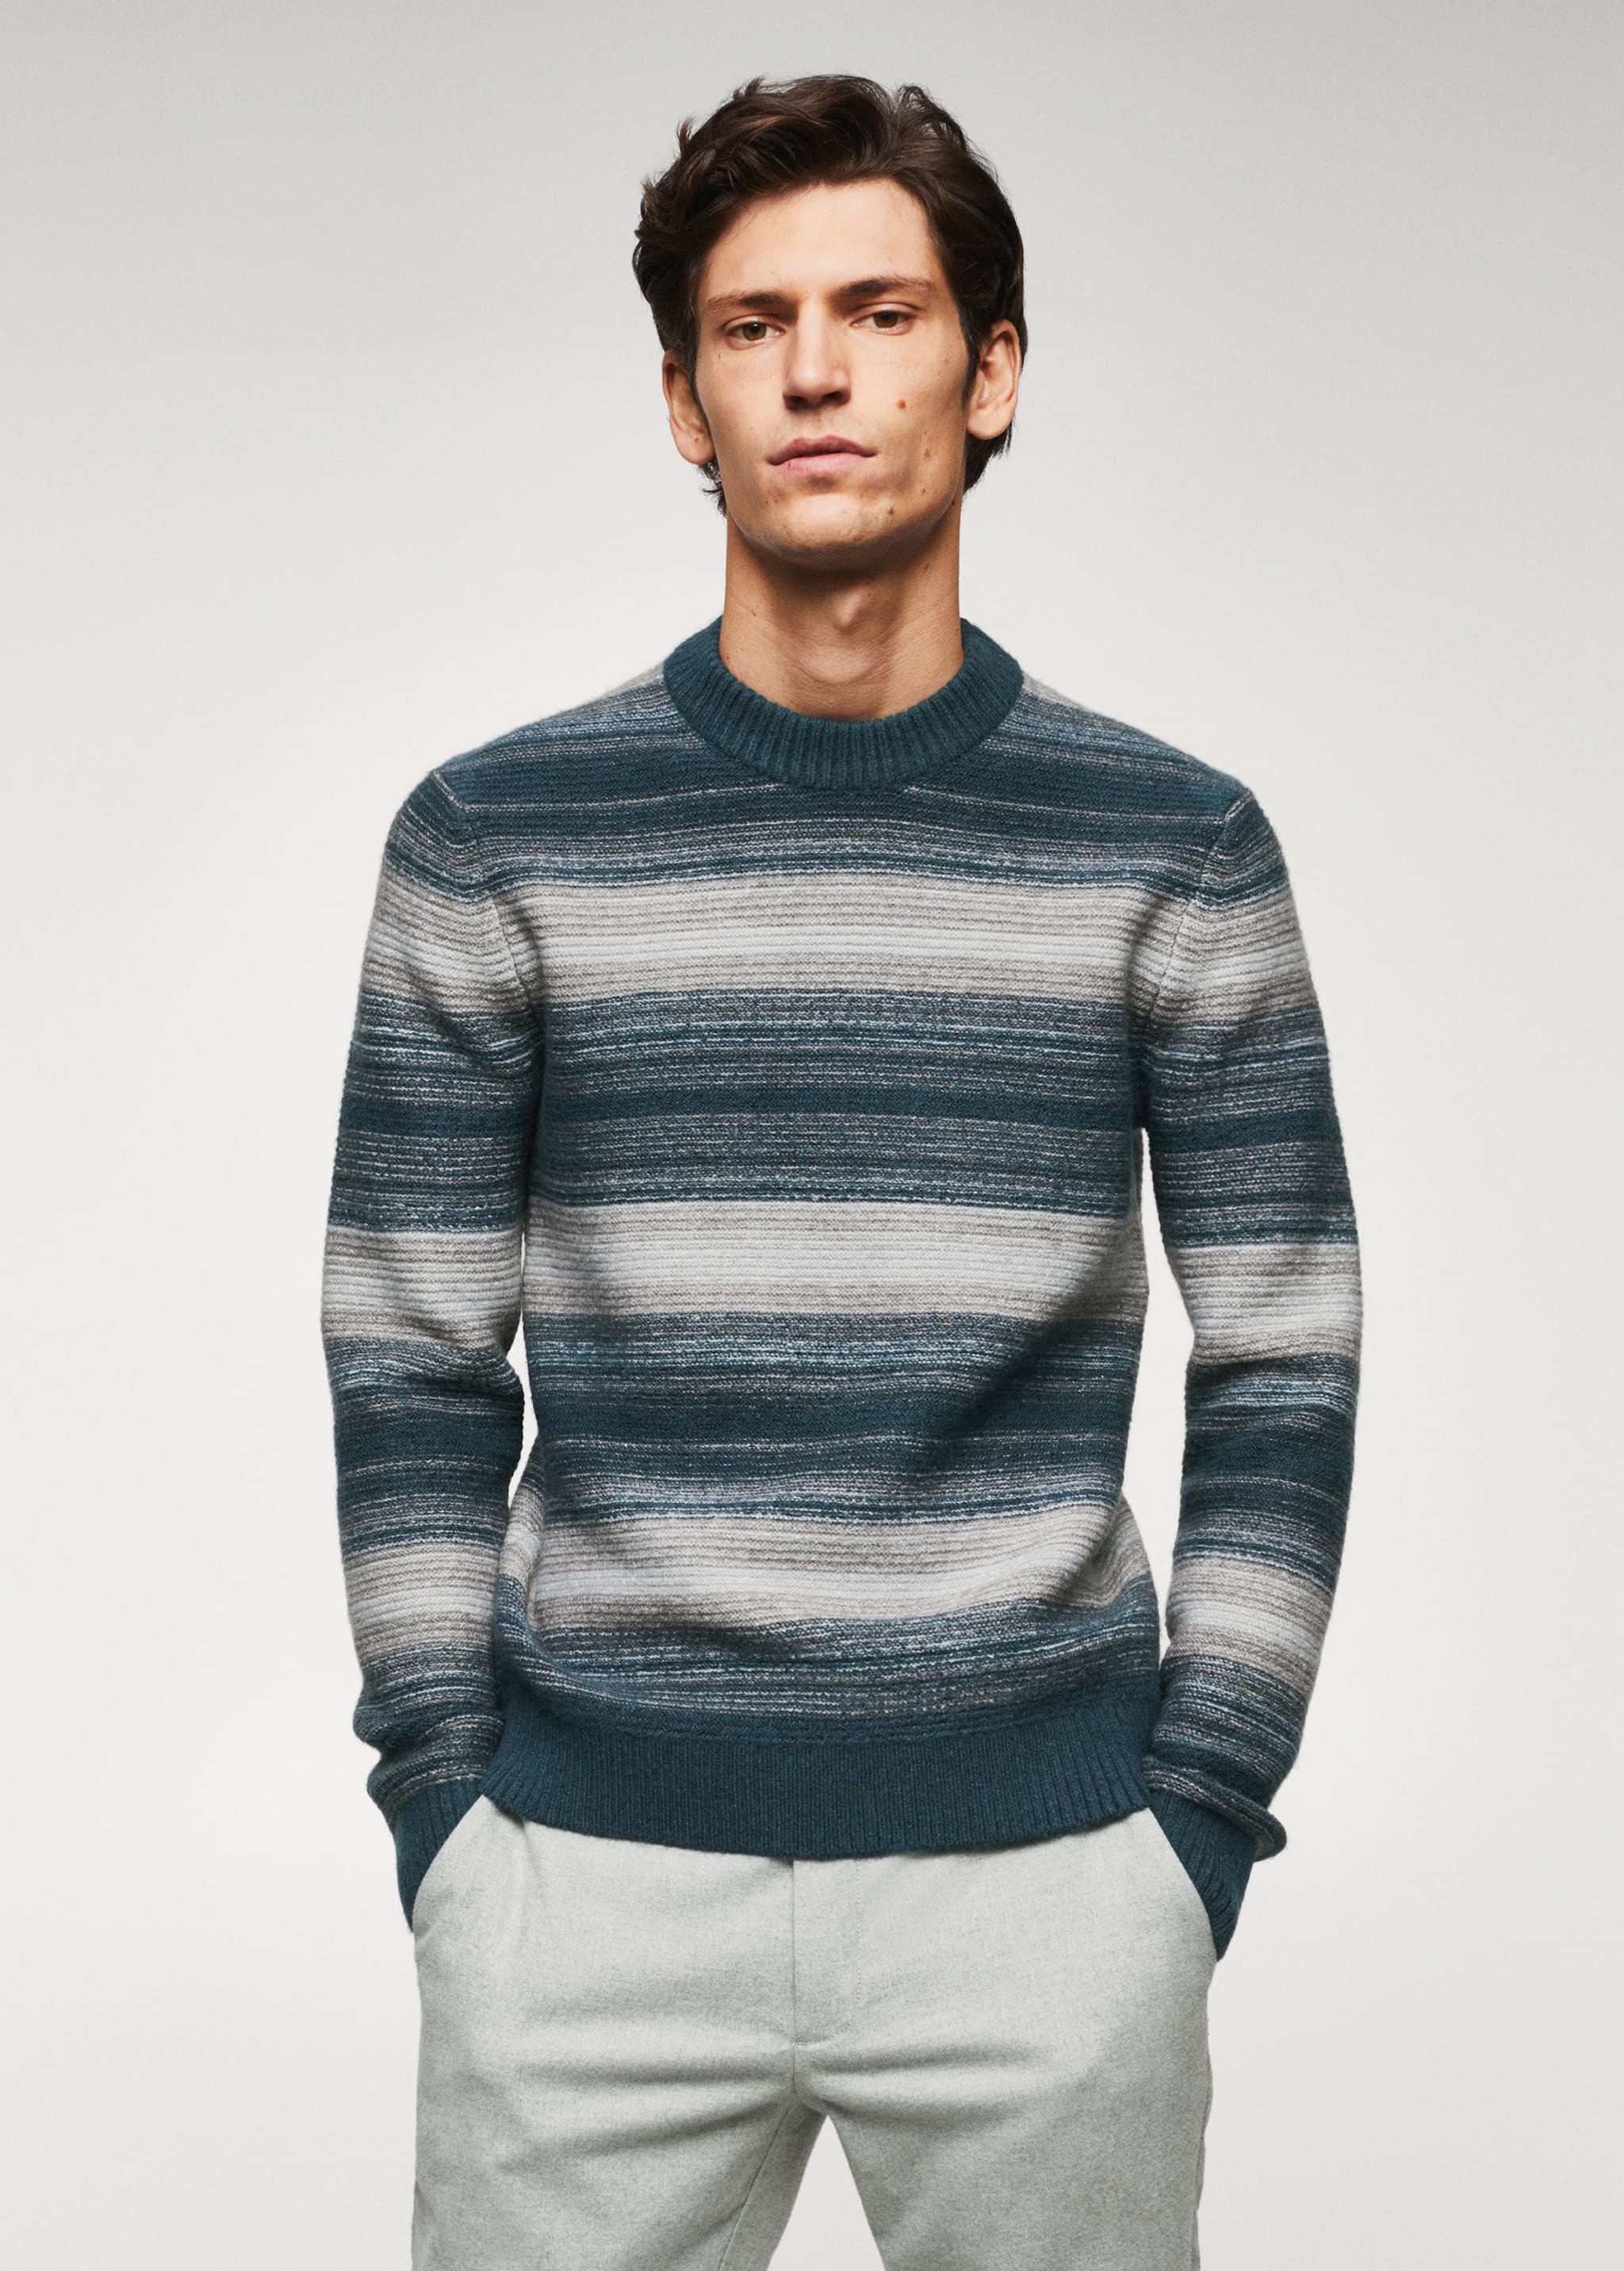 Textured degrade sweater - Medium plane